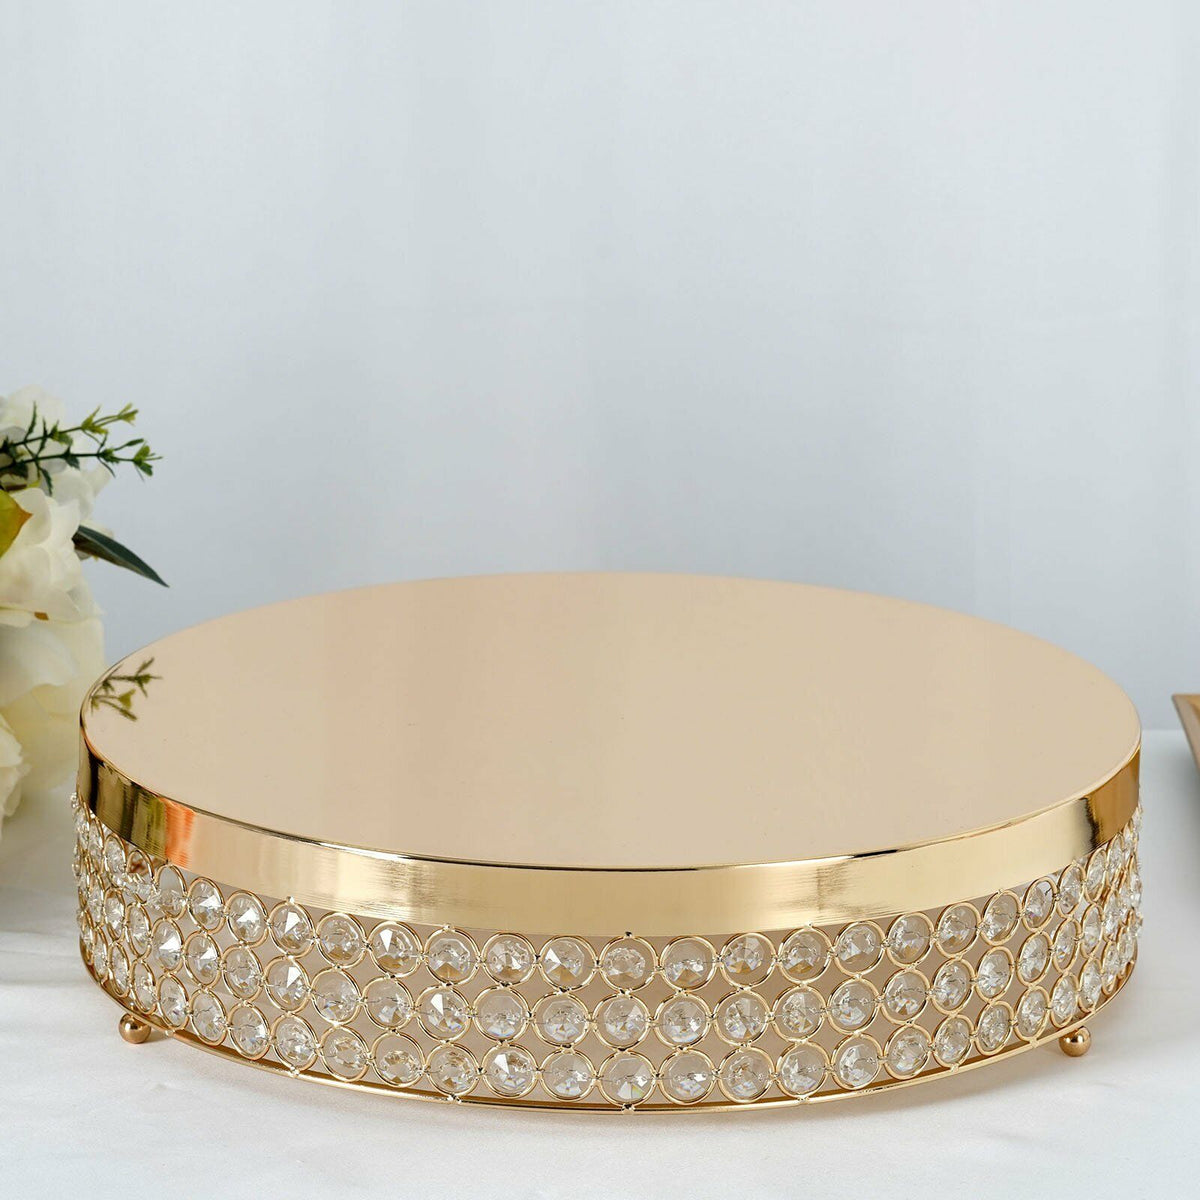 15.5" Gold Metal Wedding Cake Stand with Crystal Beads Dessert Display